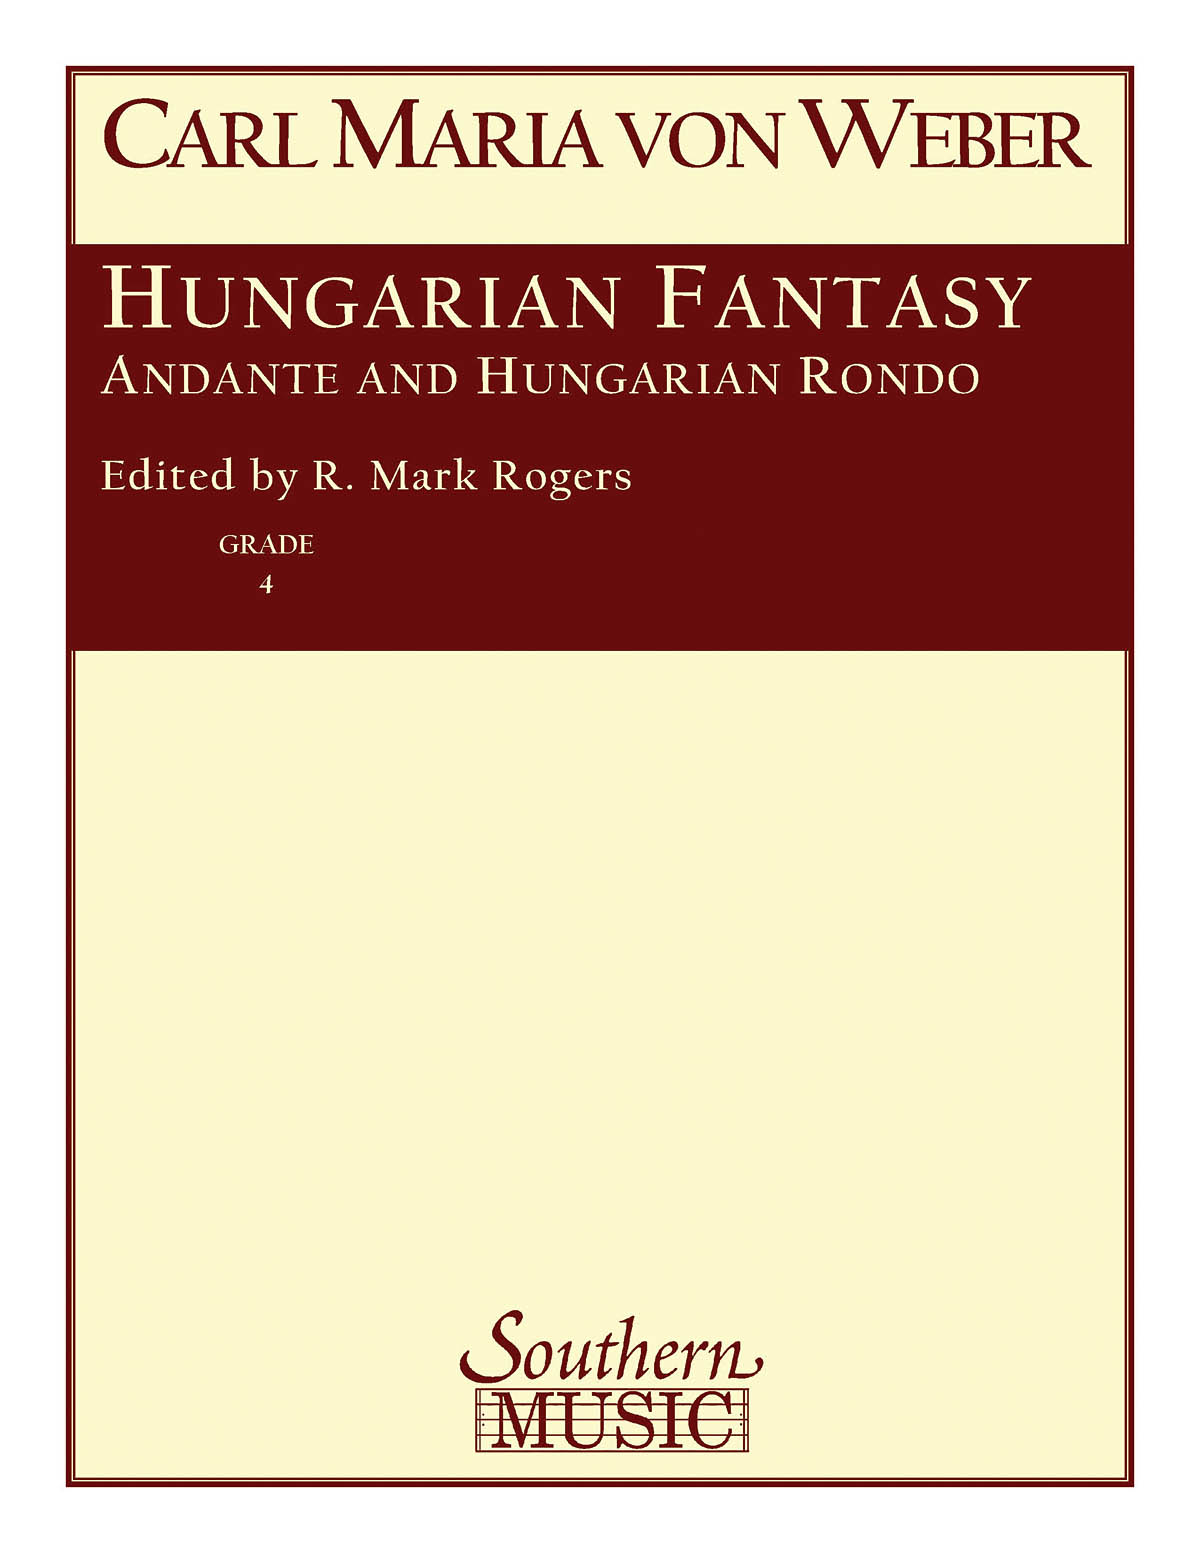 Carl Maria von Weber: Andante And Hungarian Rondo (Hungarian Fantasy): Concert